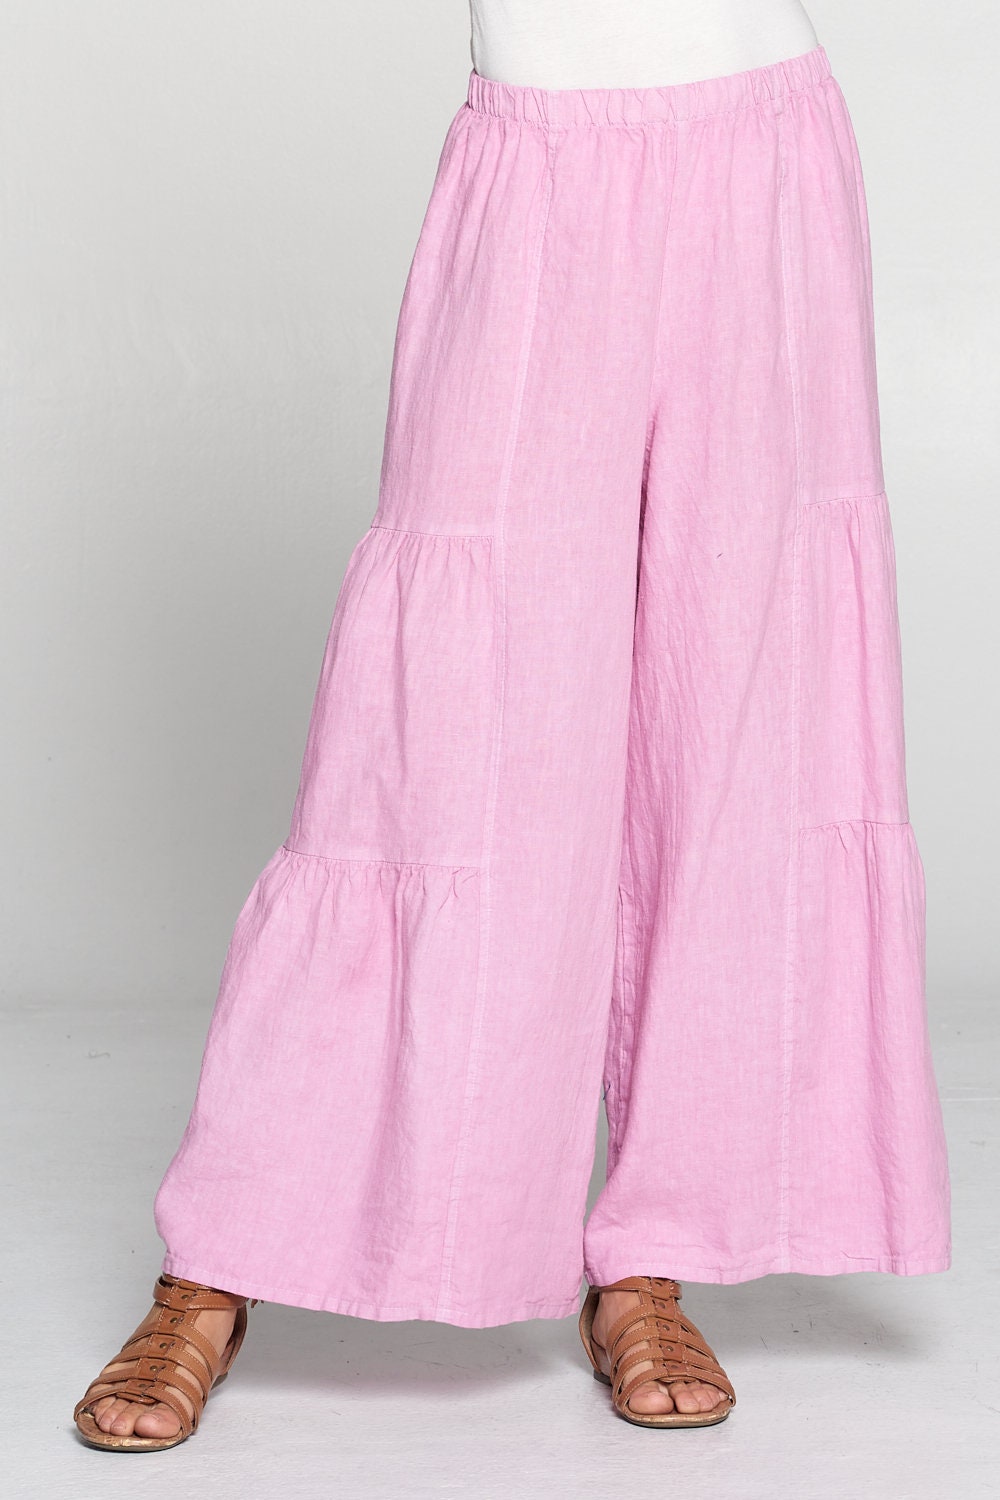 Pure Match 100% Linen 3 tier pants wide leg full length | Etsy